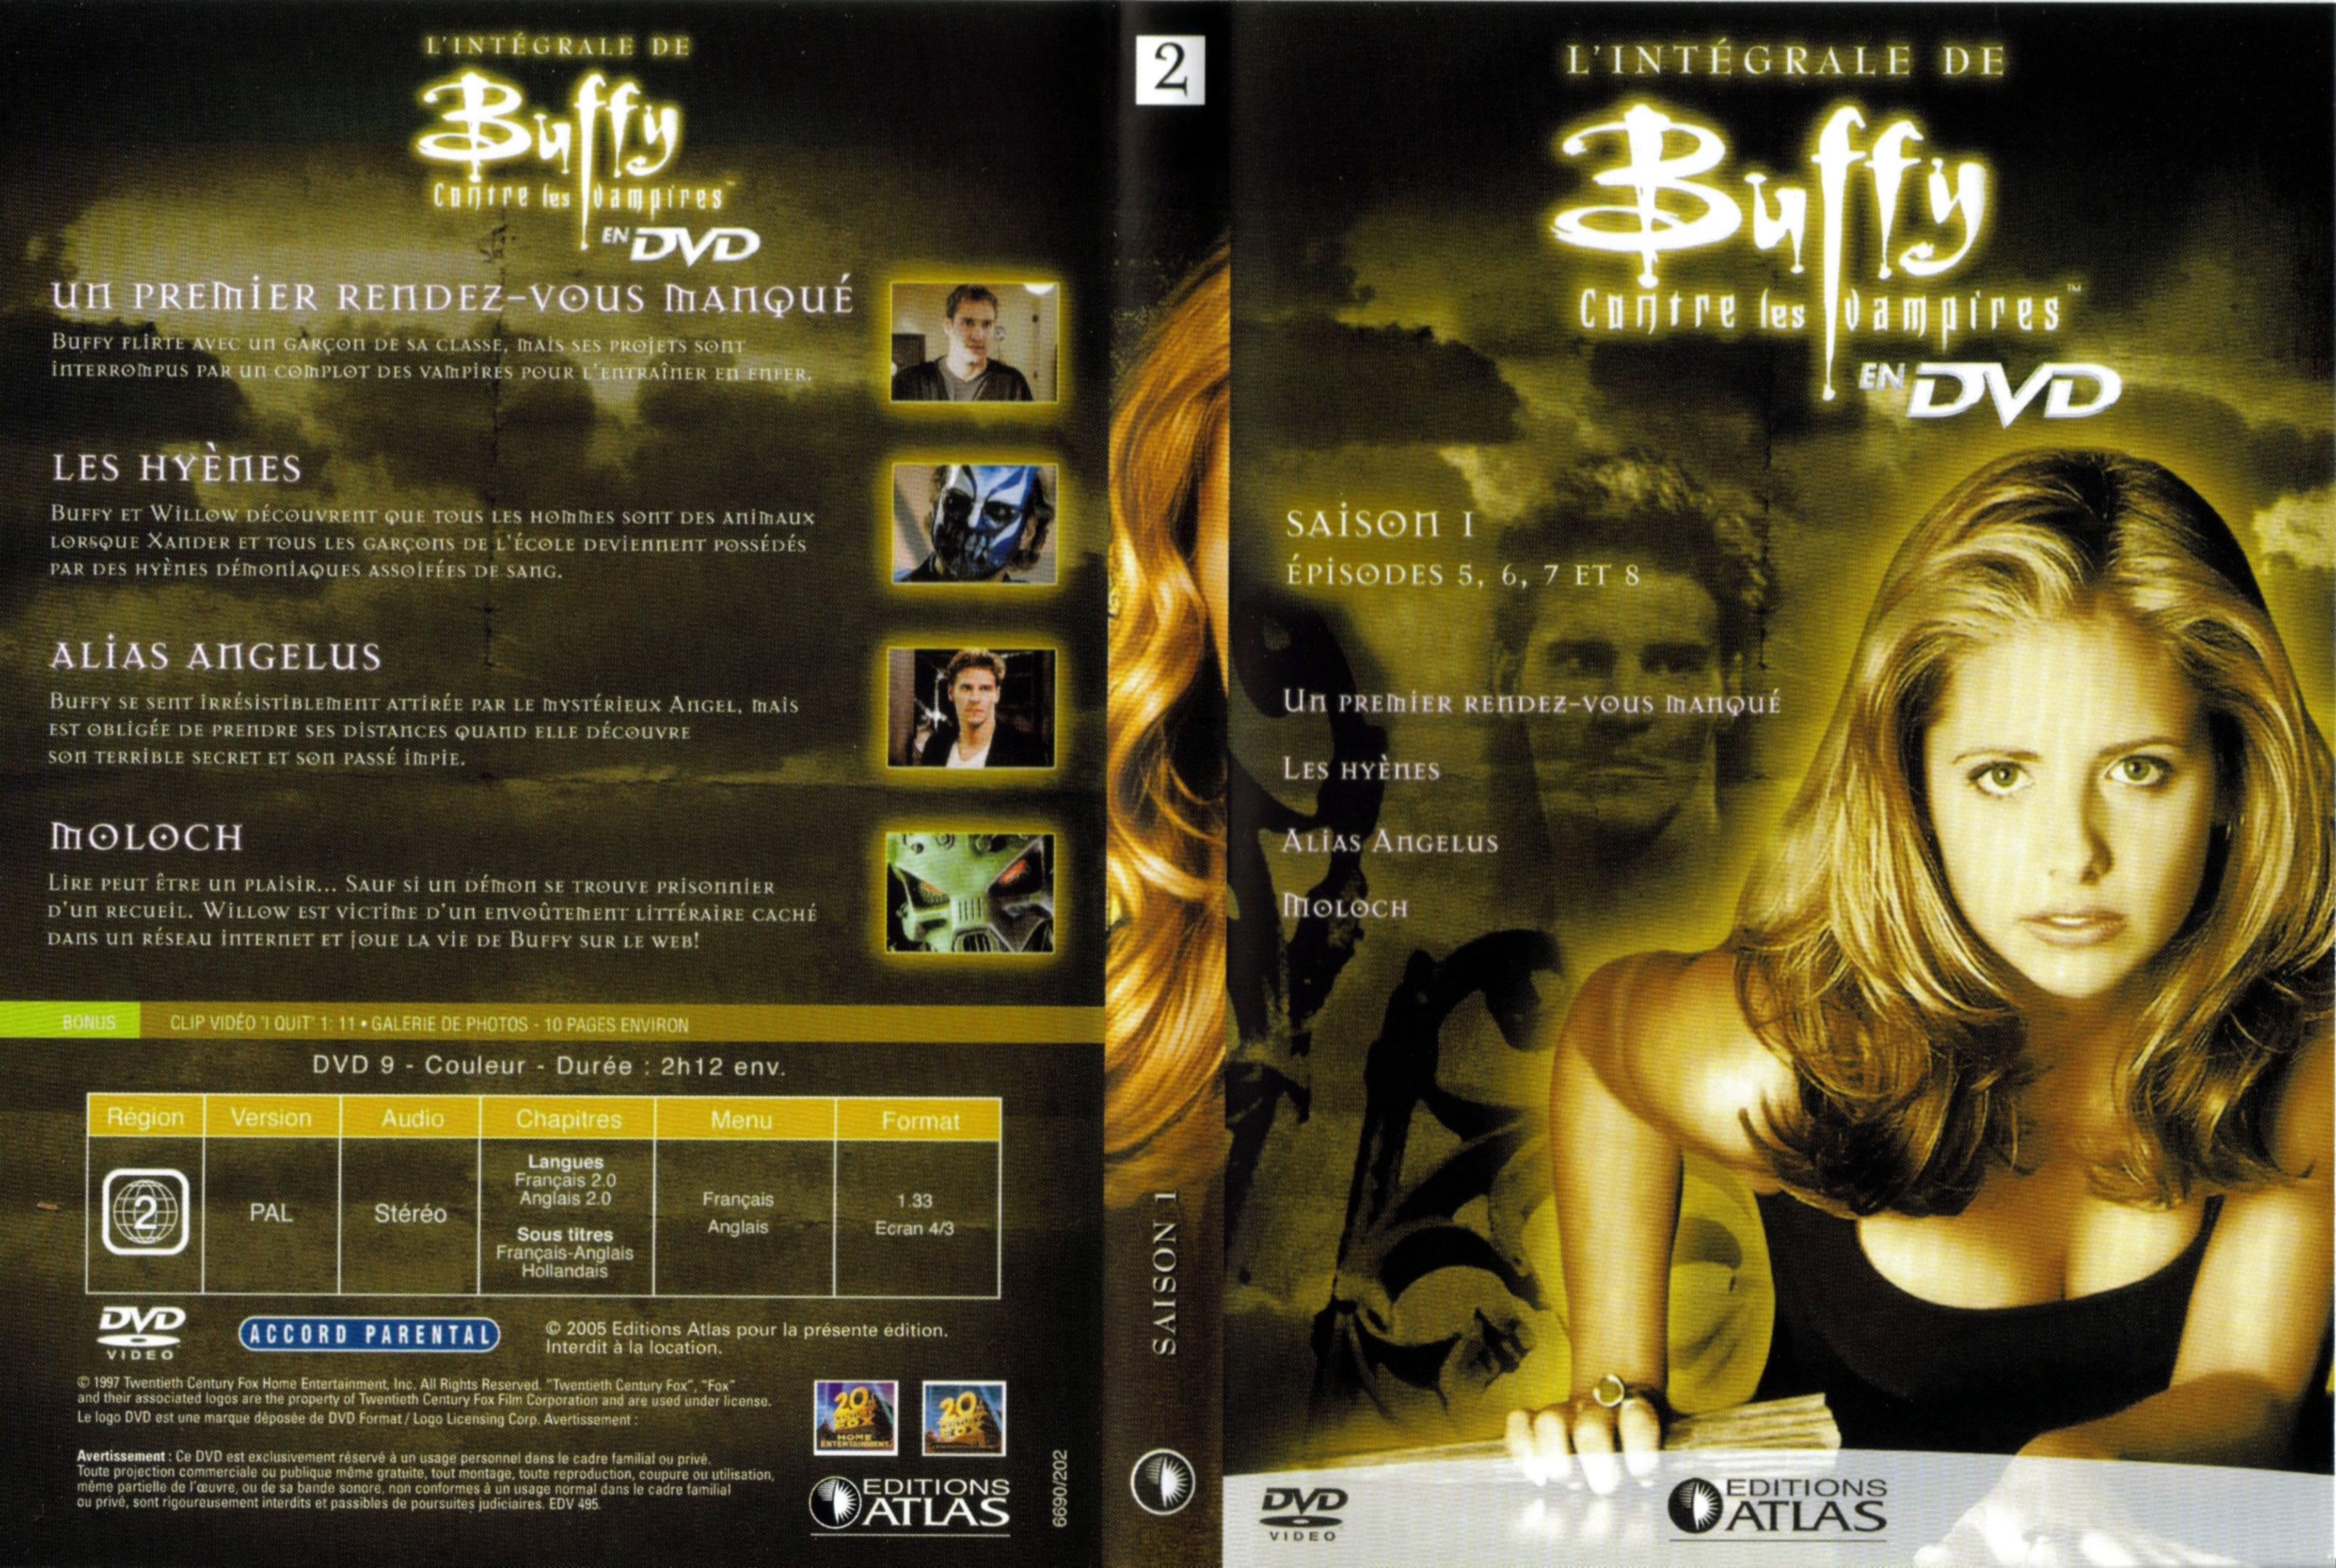 Jaquette DVD Buffy contre les vampires DVD 02 Ed Atlas